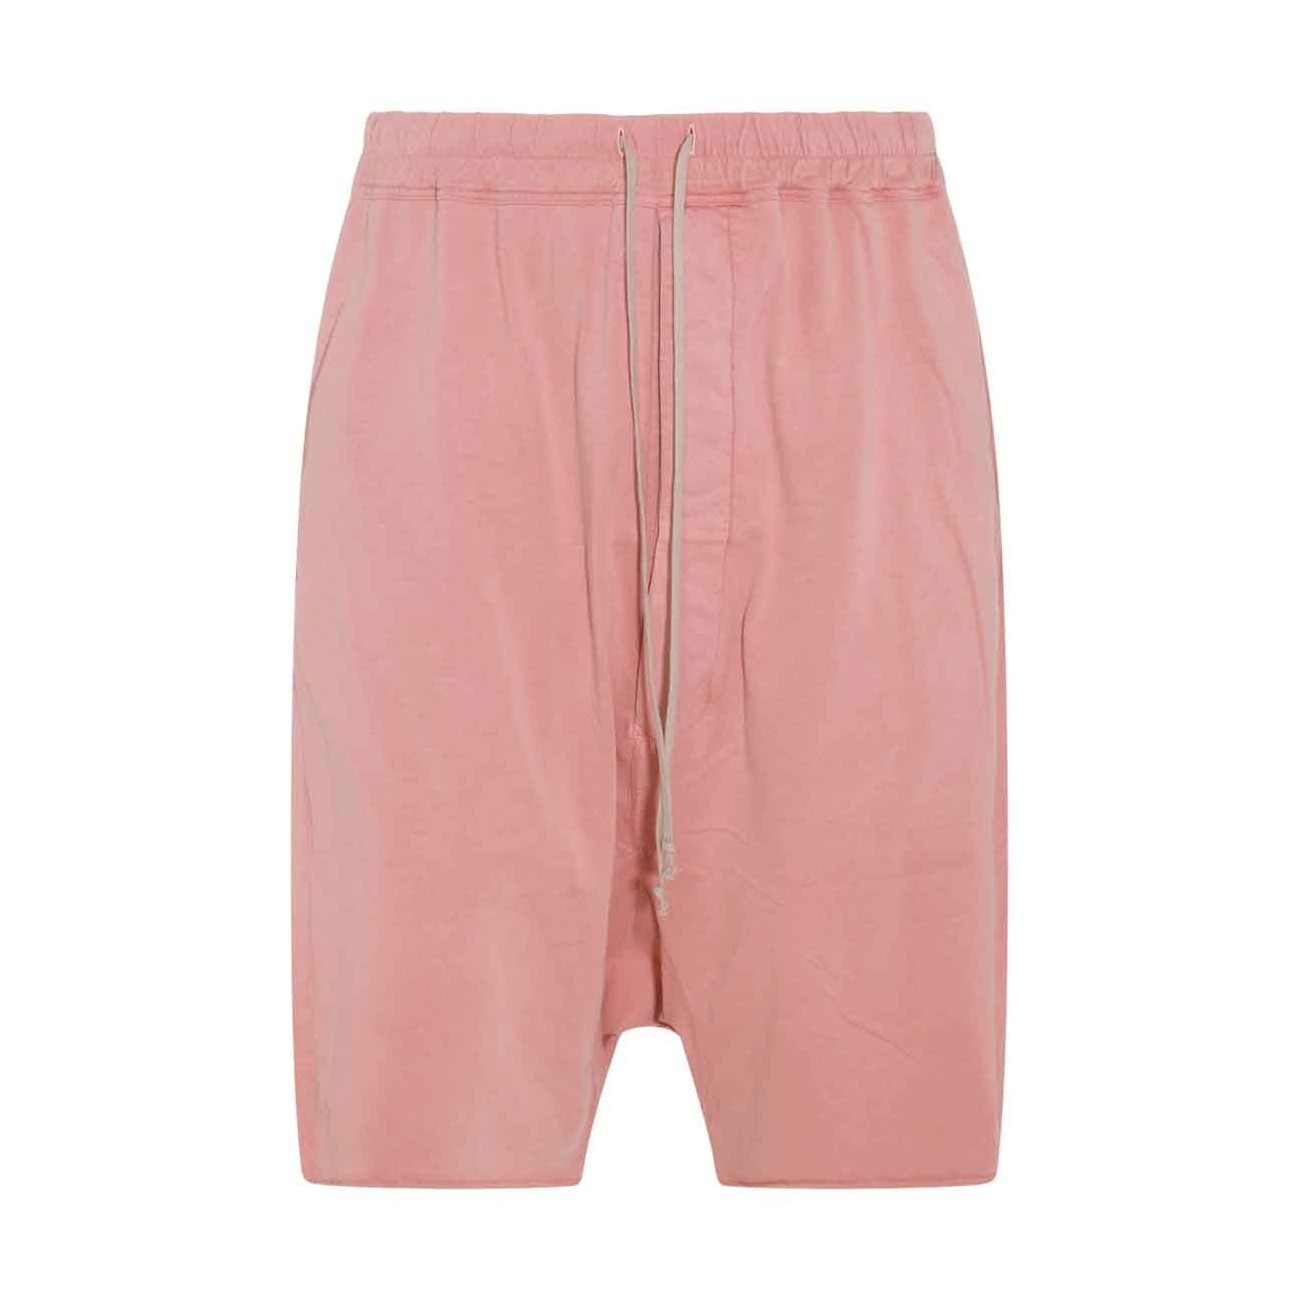 pink cotton shorts - 1